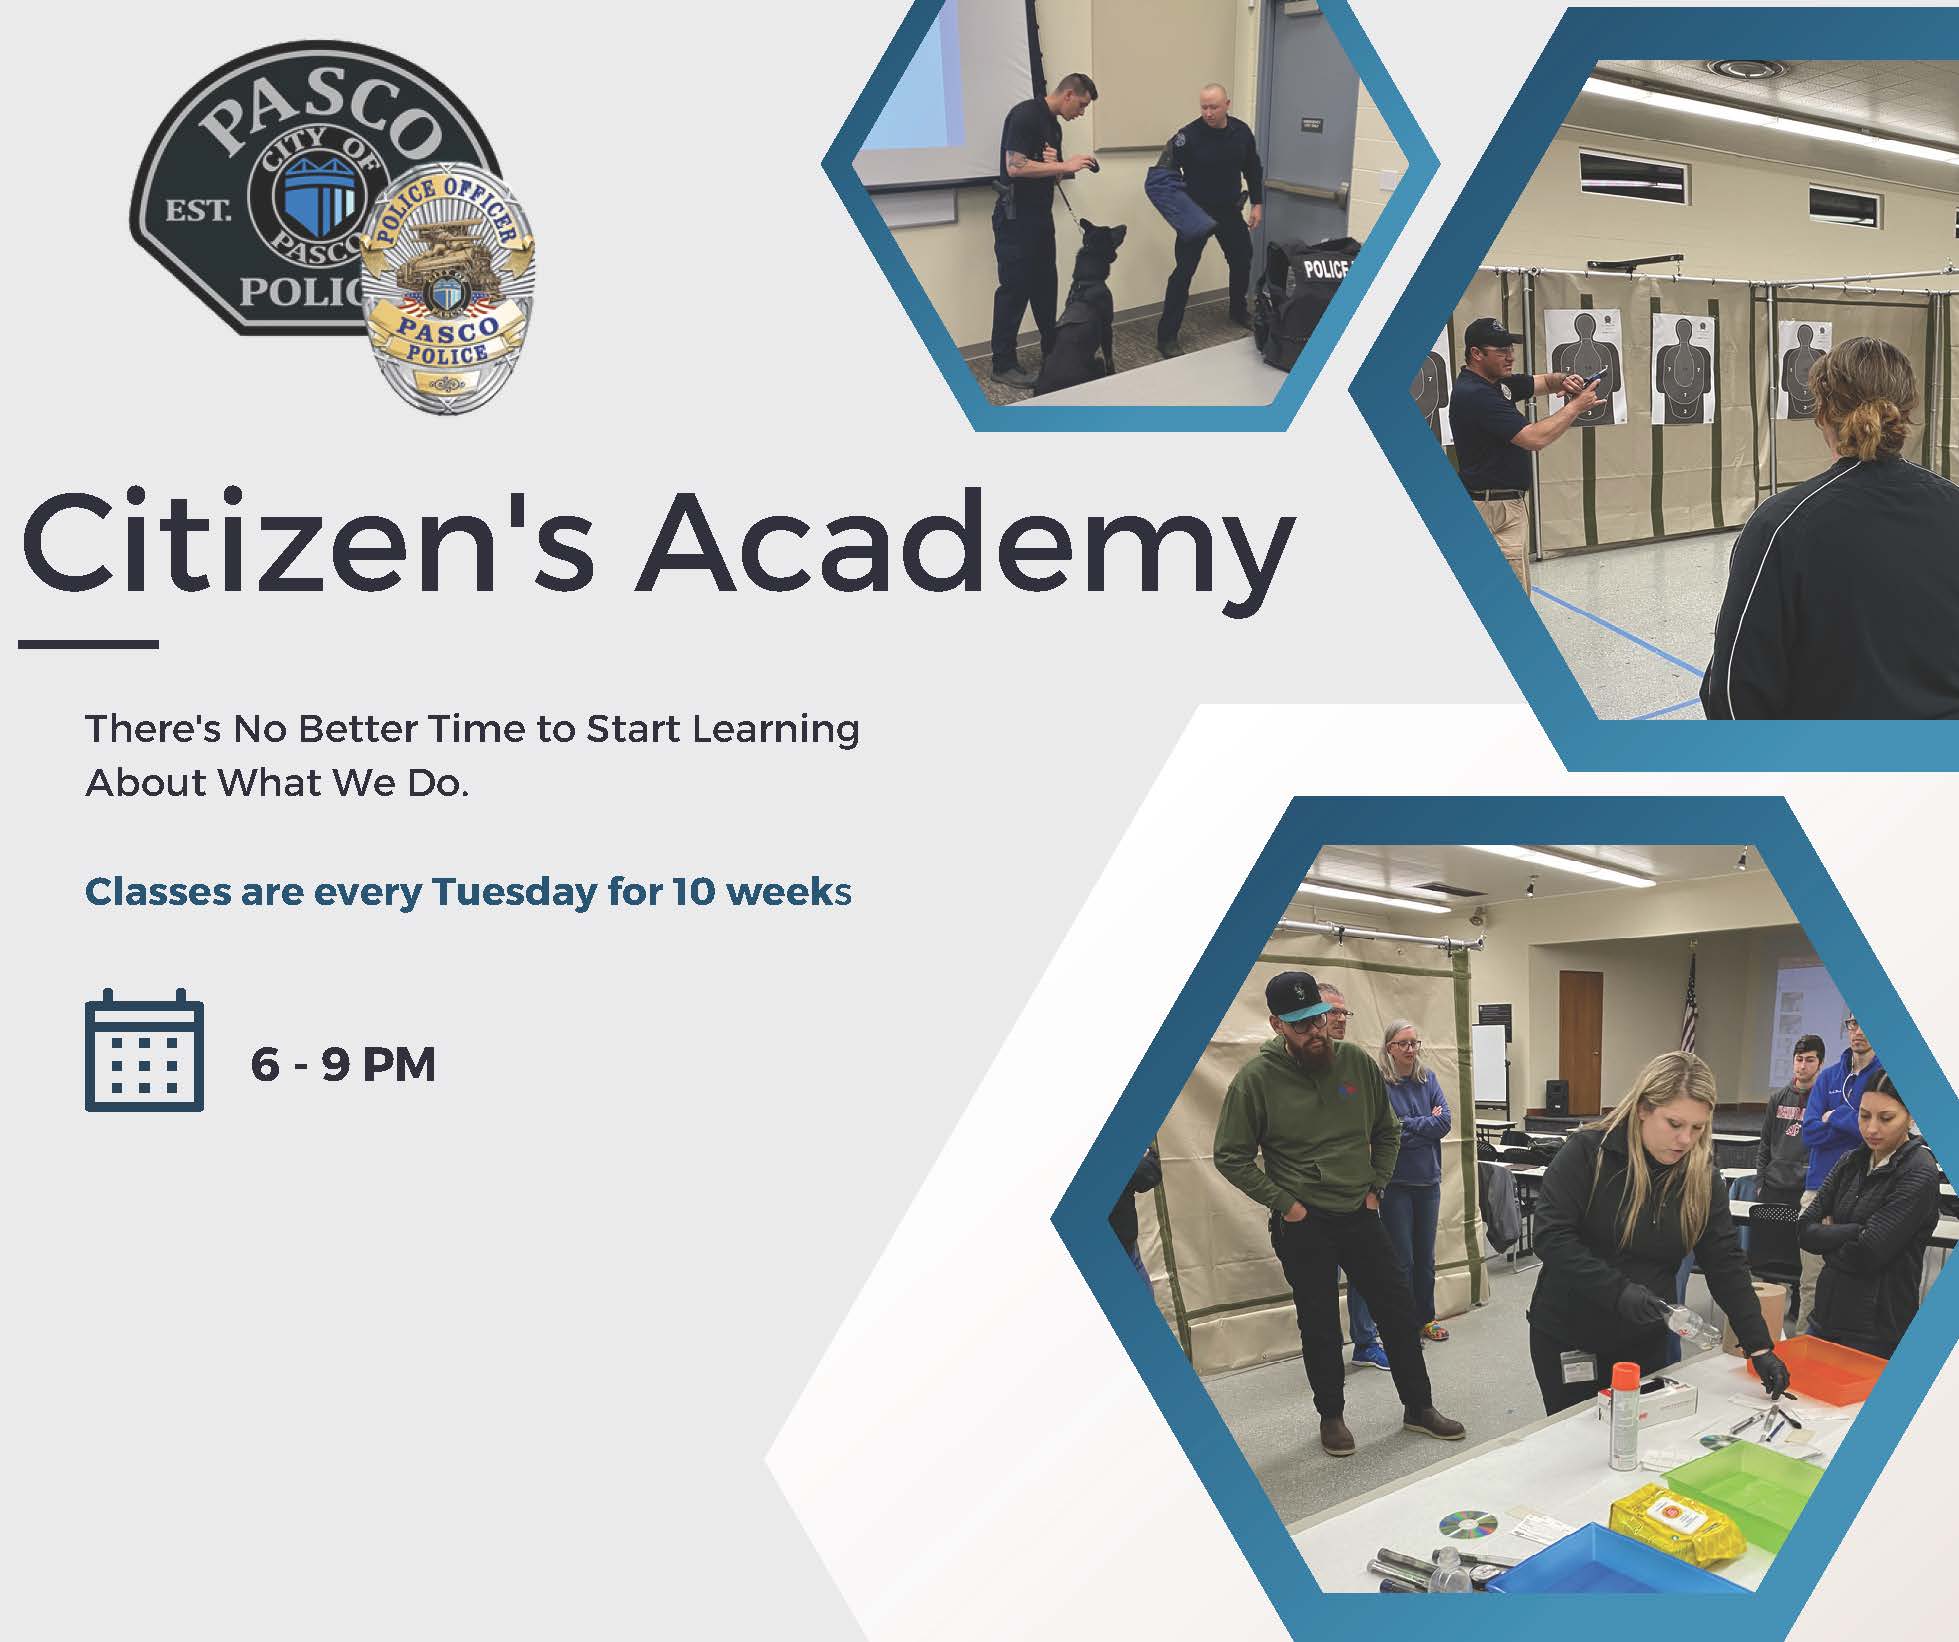 Citizens Academy